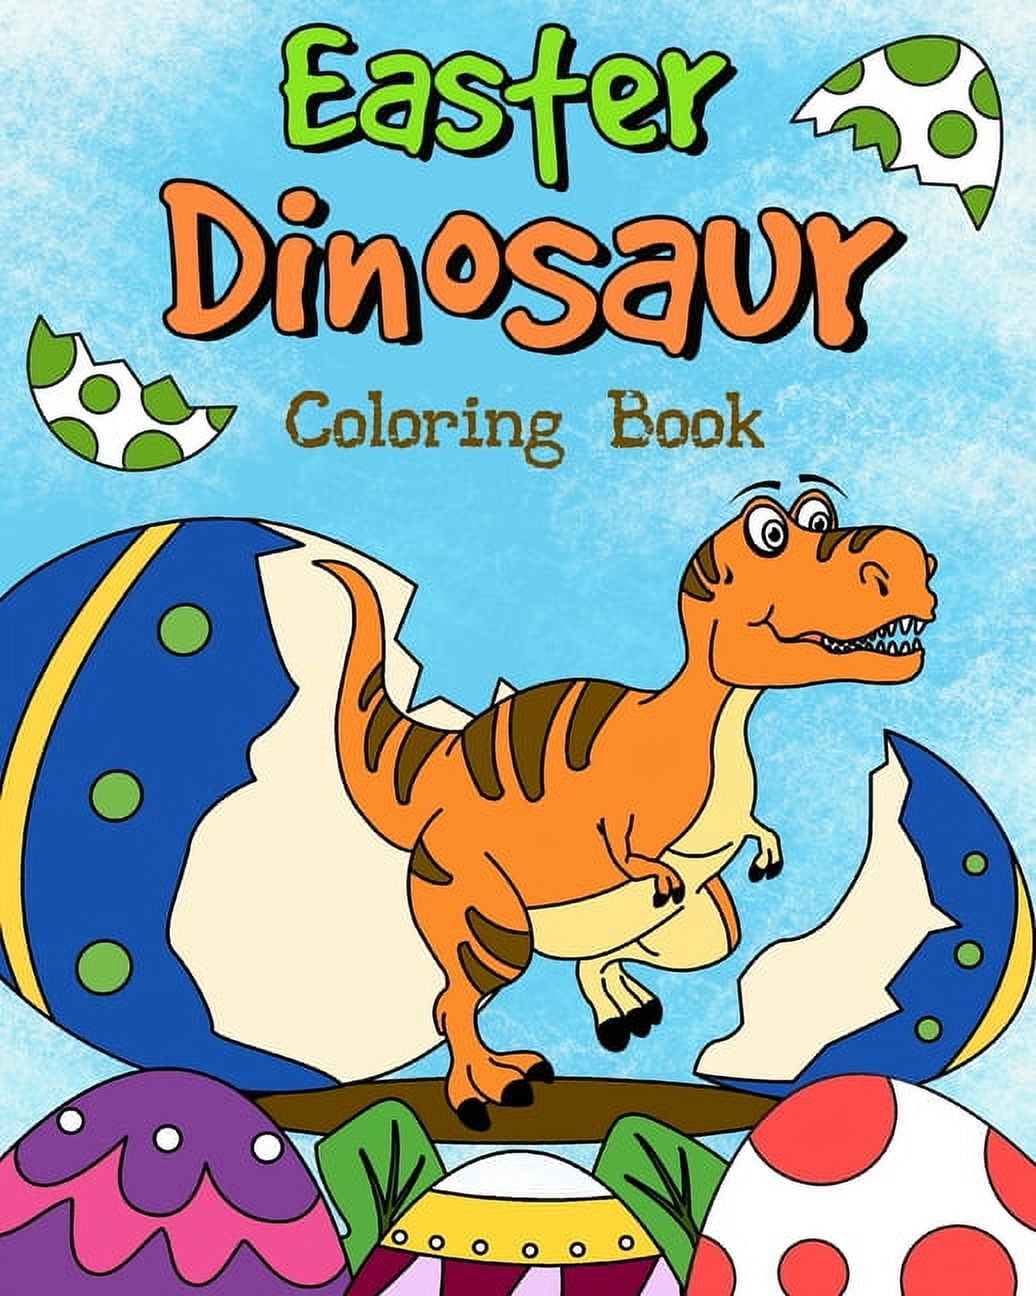 Easter dinosaur coloring book coloring book for kids easter egg hunt coloring easter gift for kid paperback